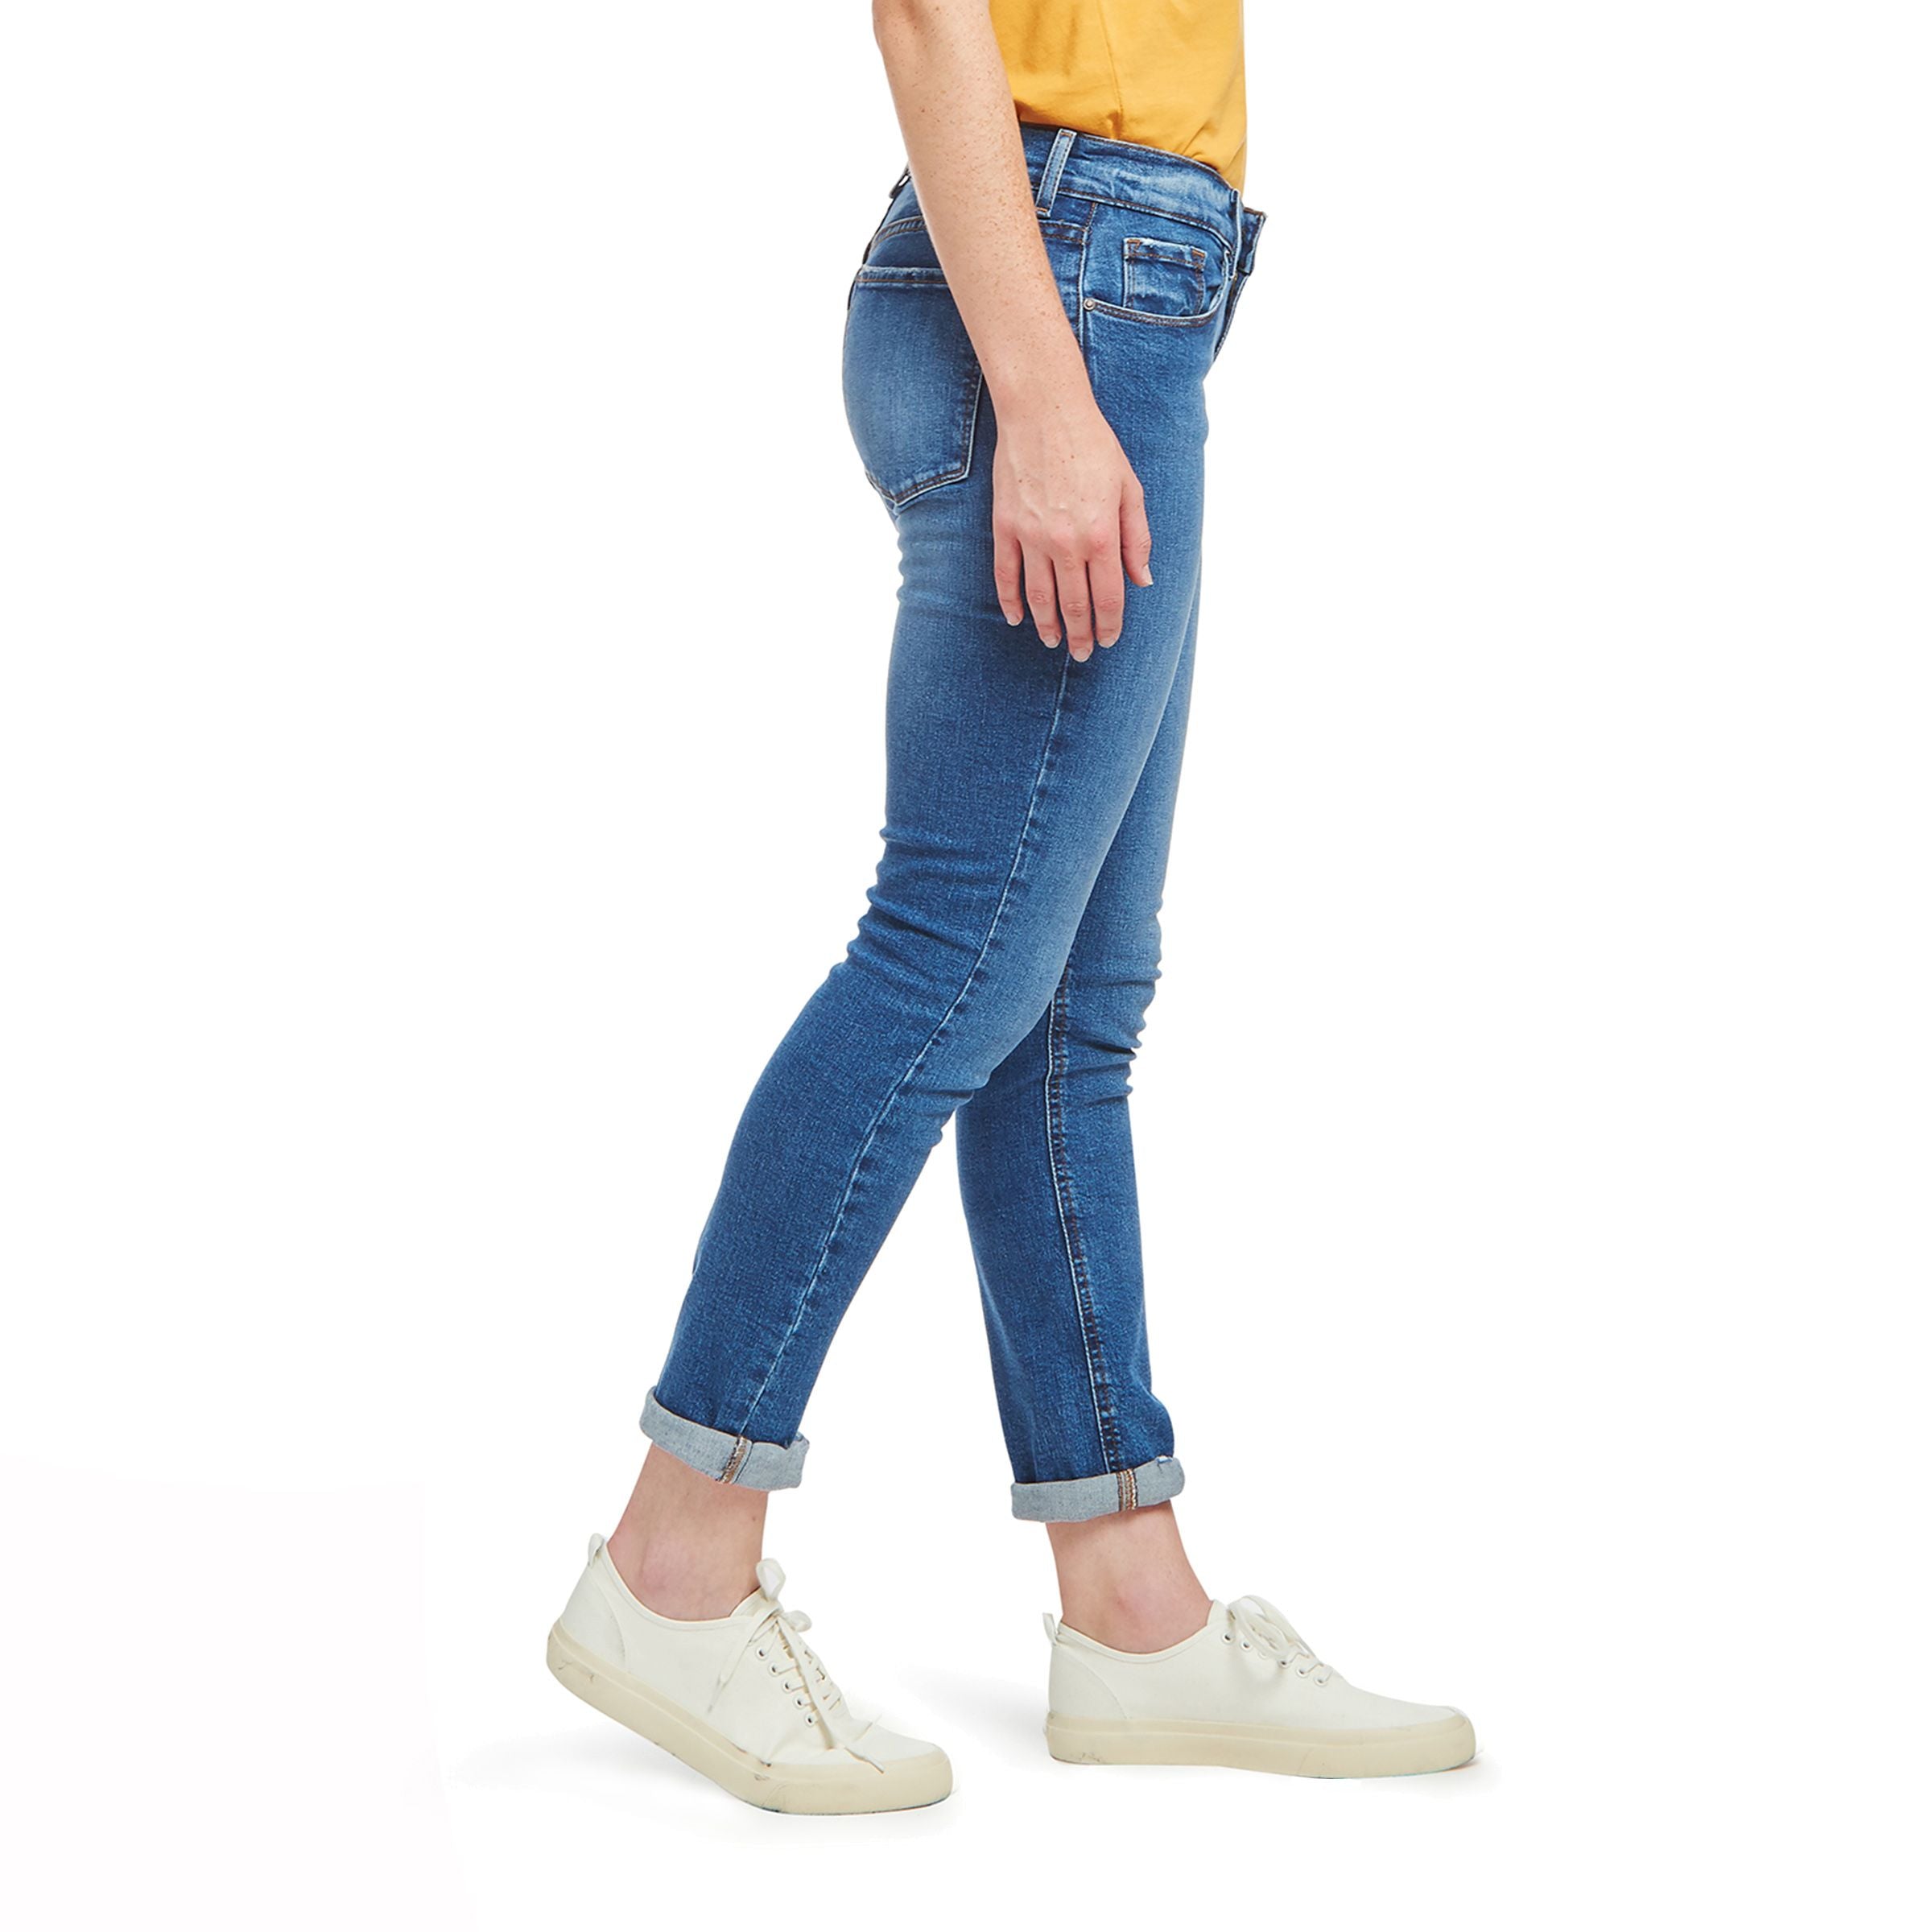 Women wearing Bleu clair/Médium Slim Boyfriend Ridge Jeans